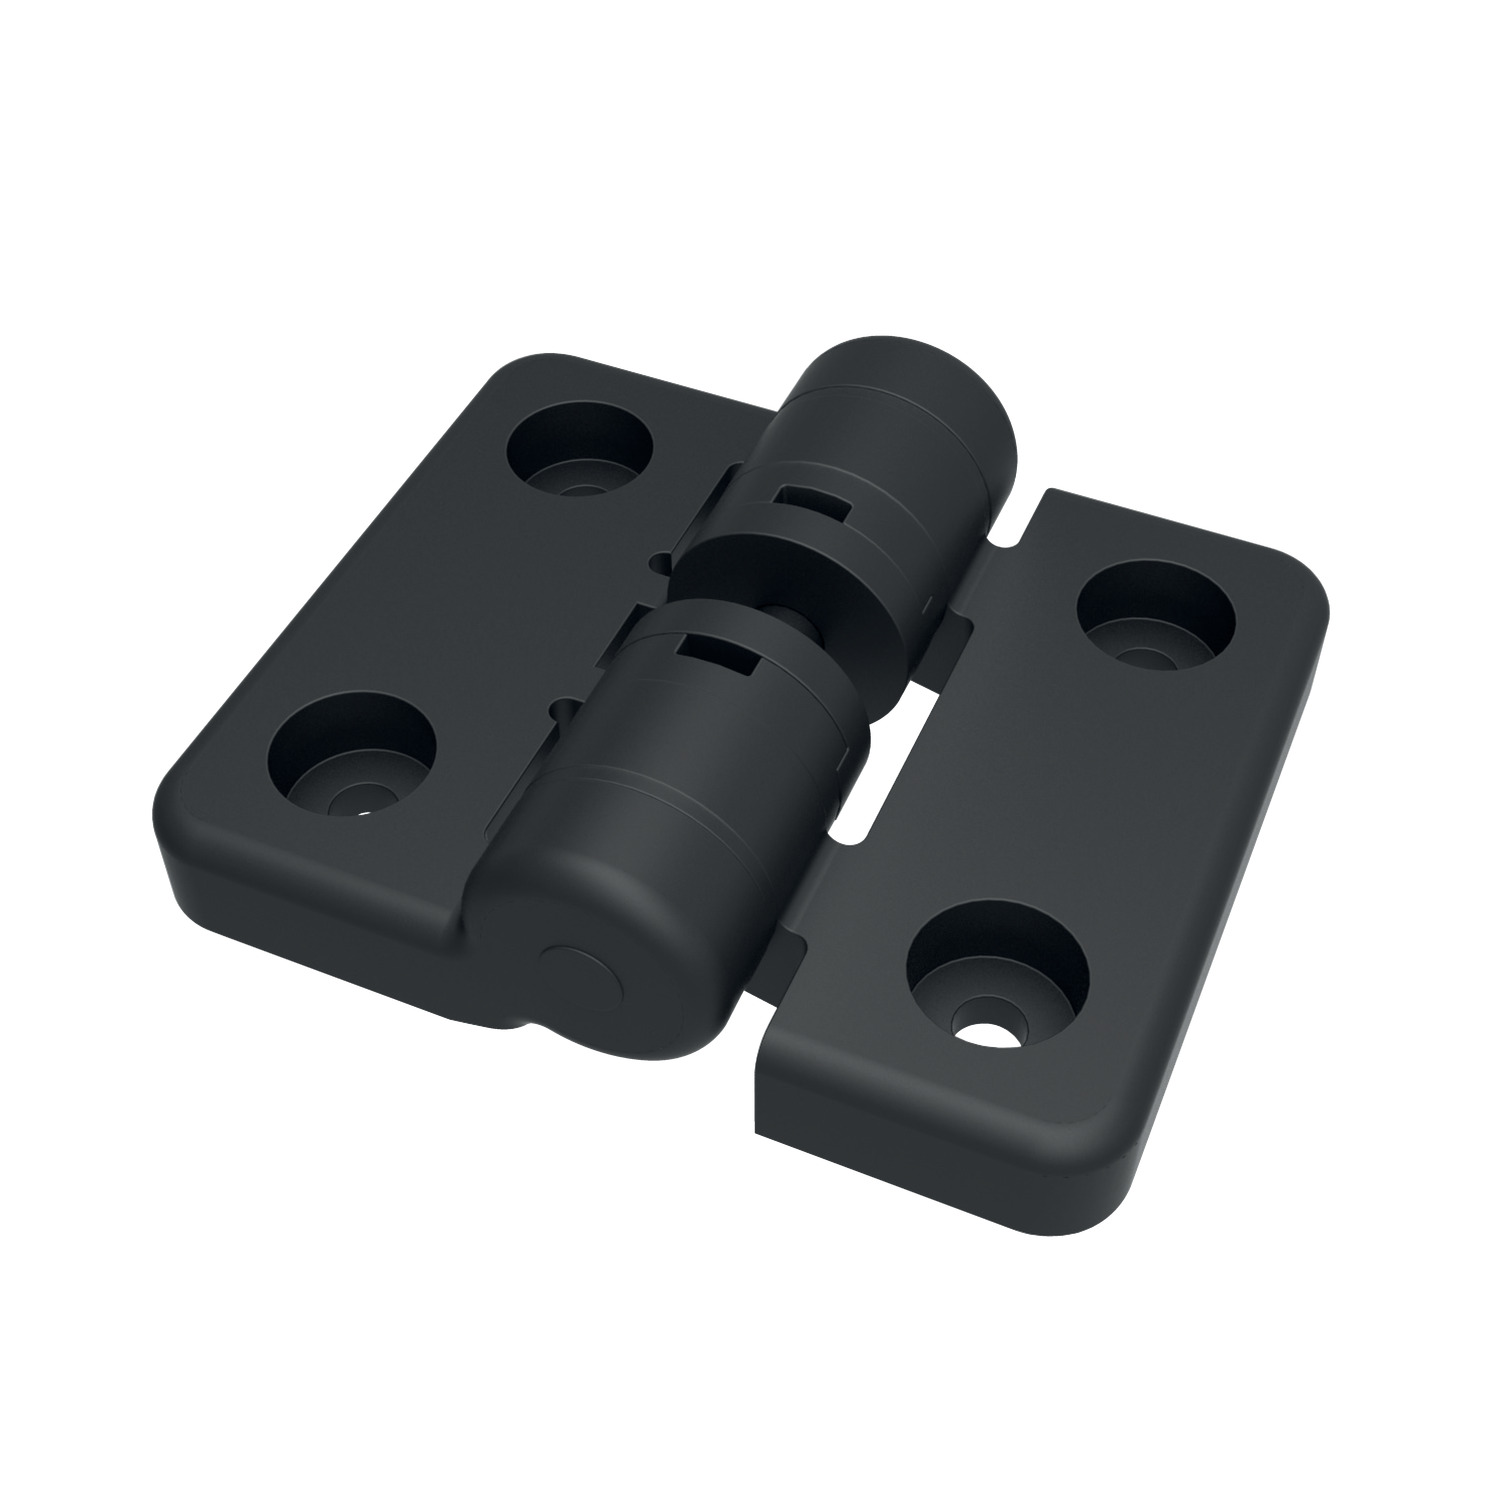 Product S4100, Detent Positioning Hinges screw mount - plastic / 